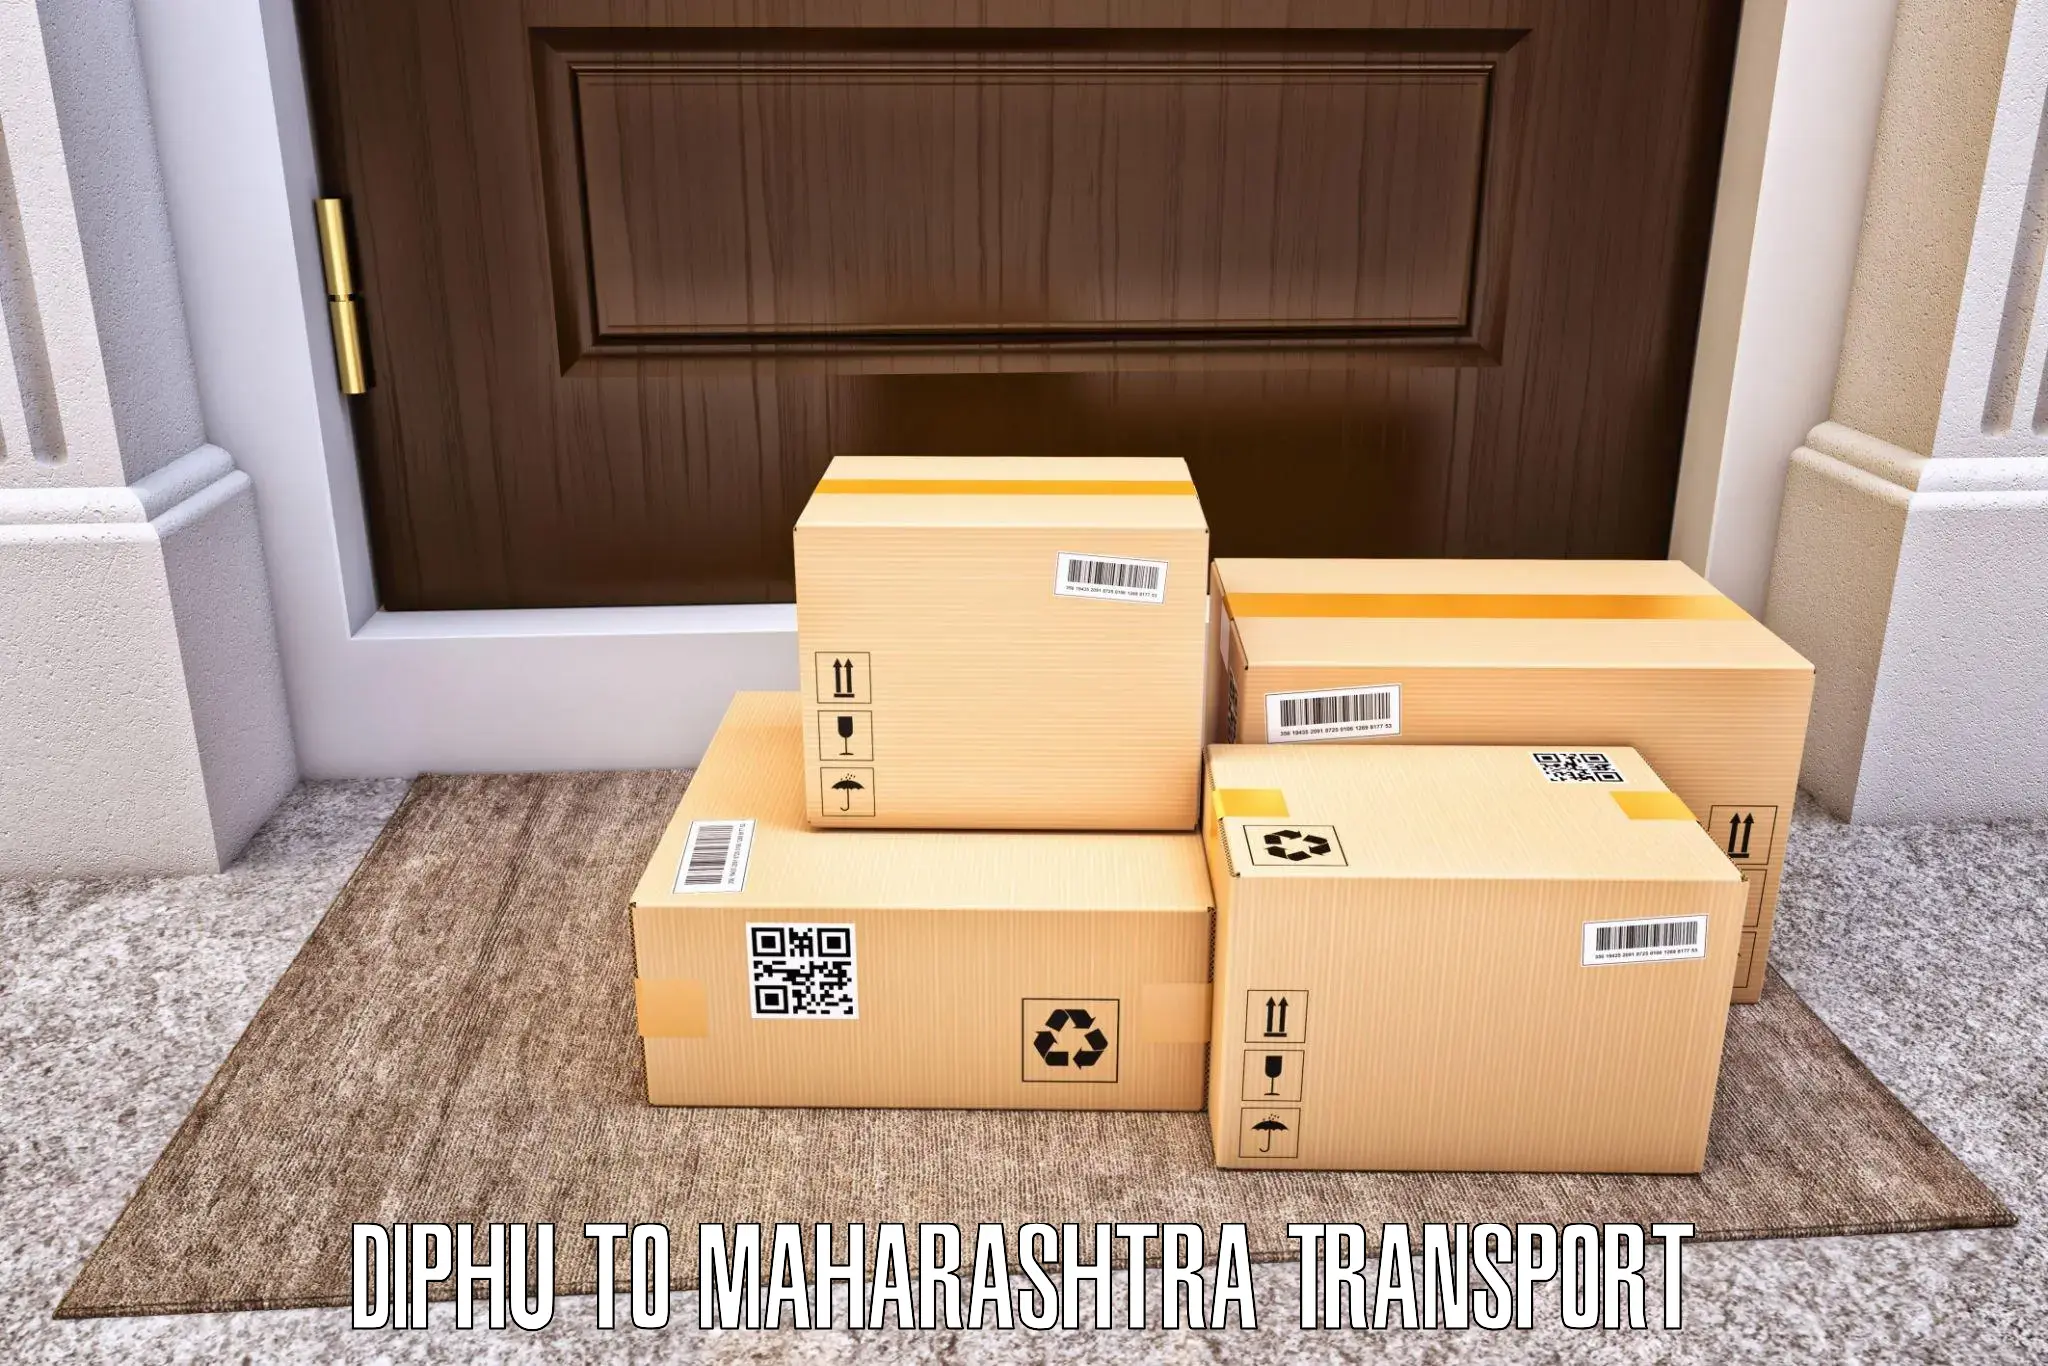 Bike shipping service Diphu to Mul